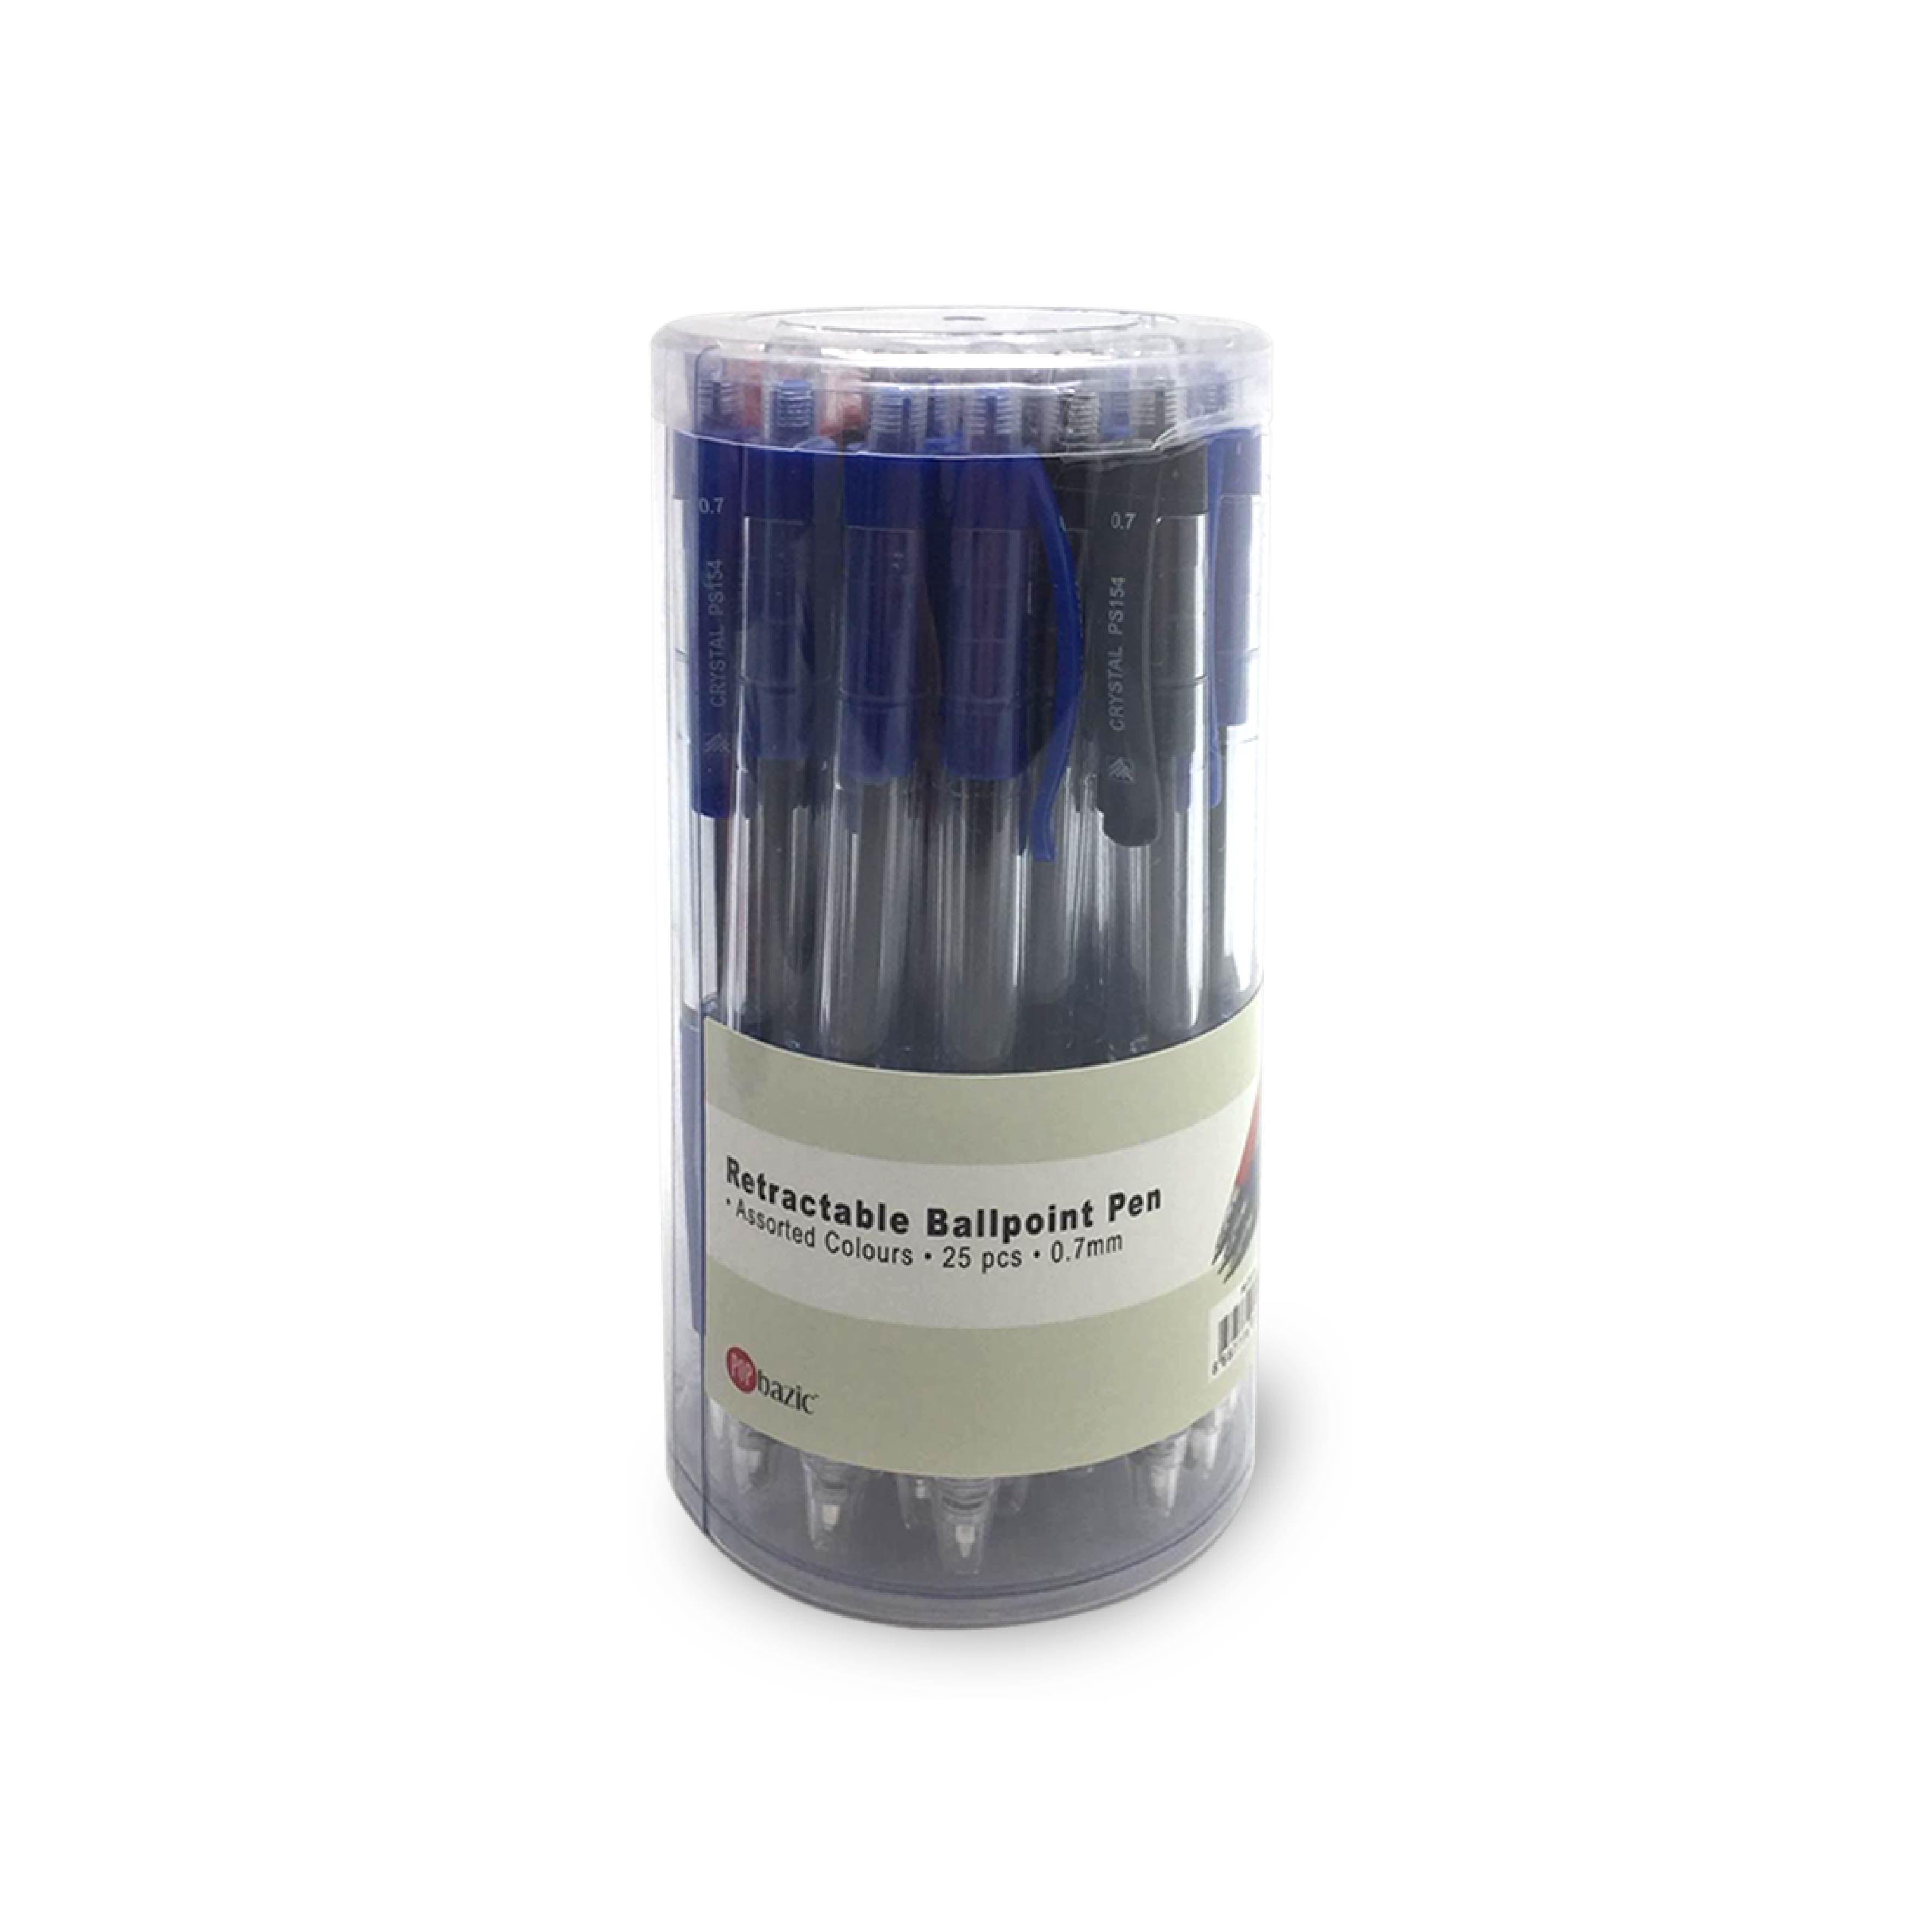 POP BAZIC Retractable Crystal Ball Pen 0.7mm - _MS, ECTL-AUG23, ECTL-HOTBUY60, PEN, POP BAZIC